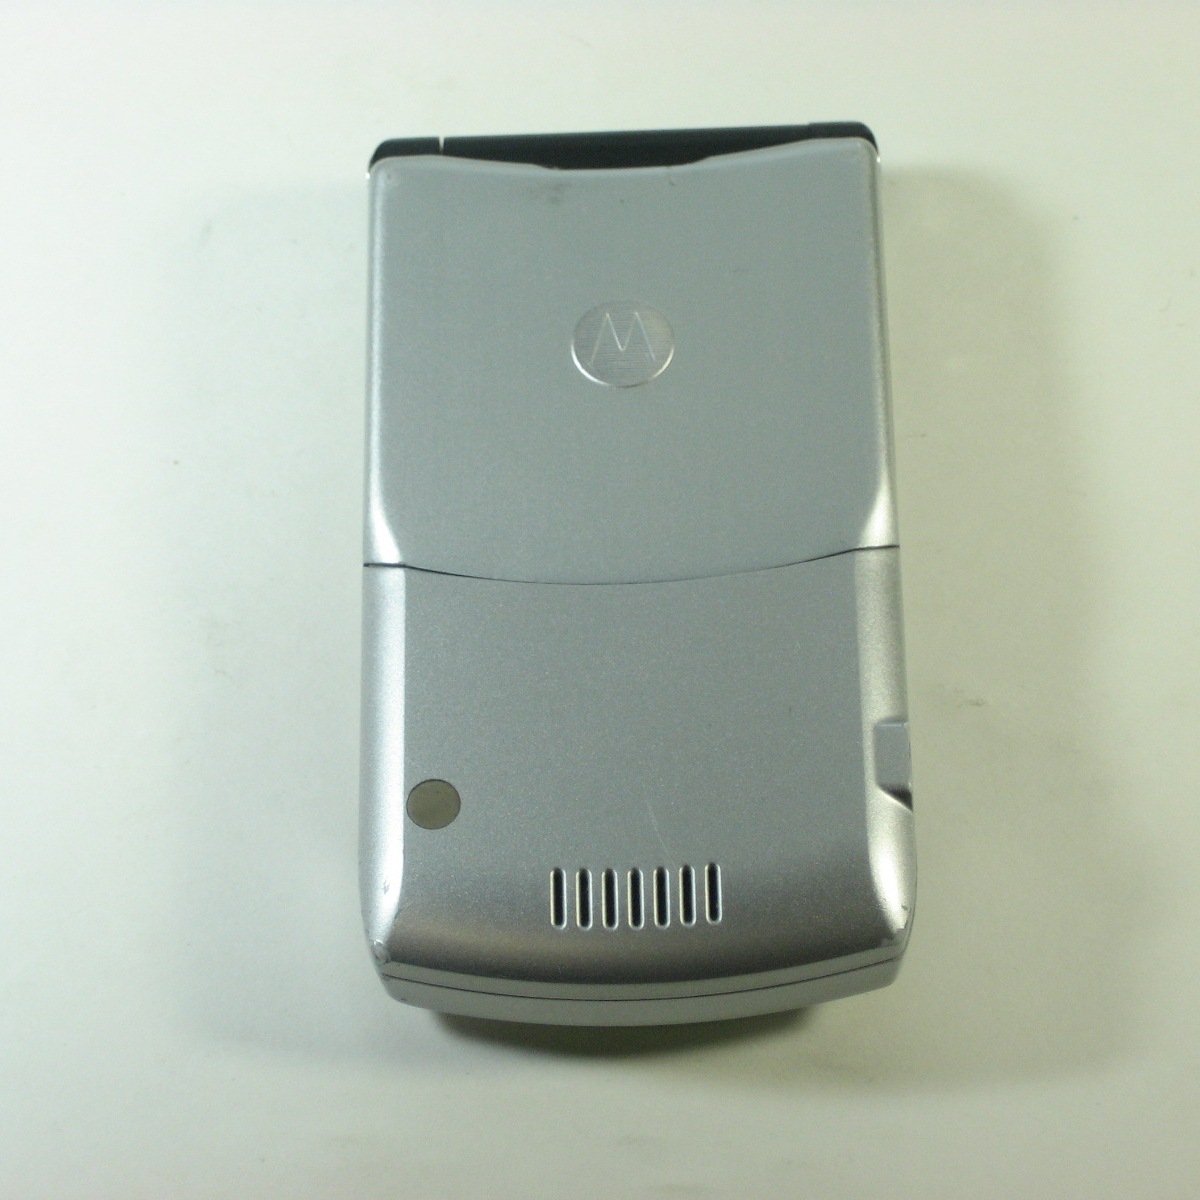 Motorola Razr V3m Bluetooth Camera Flip Cdma Phone Metro Pcs Silver B